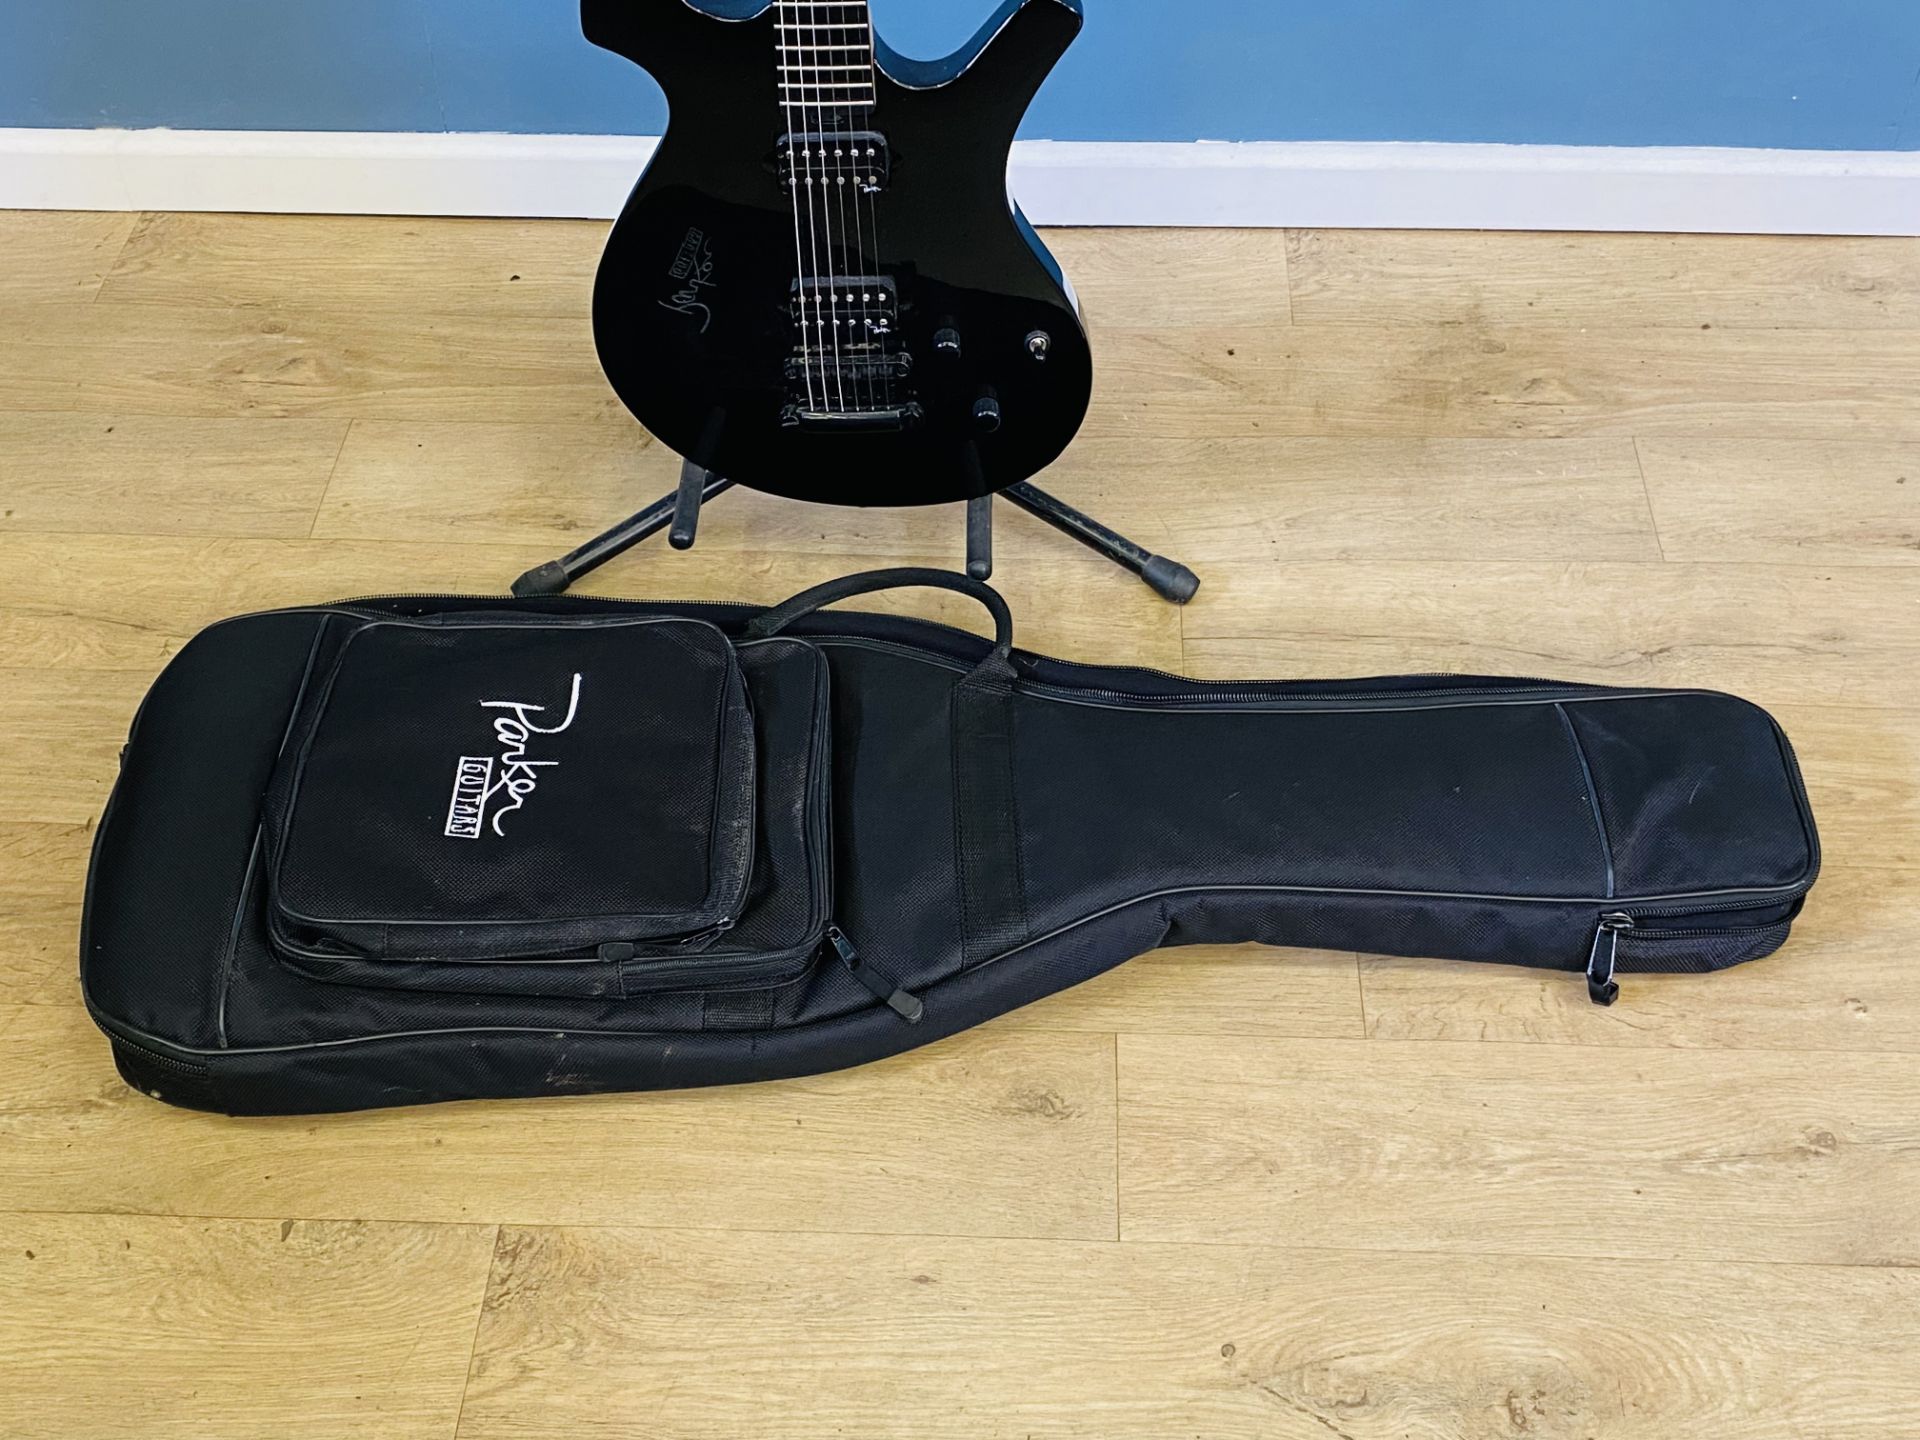 Parker P42 electric guitar in Parker soft case. Estimate £200-250 - Image 5 of 5